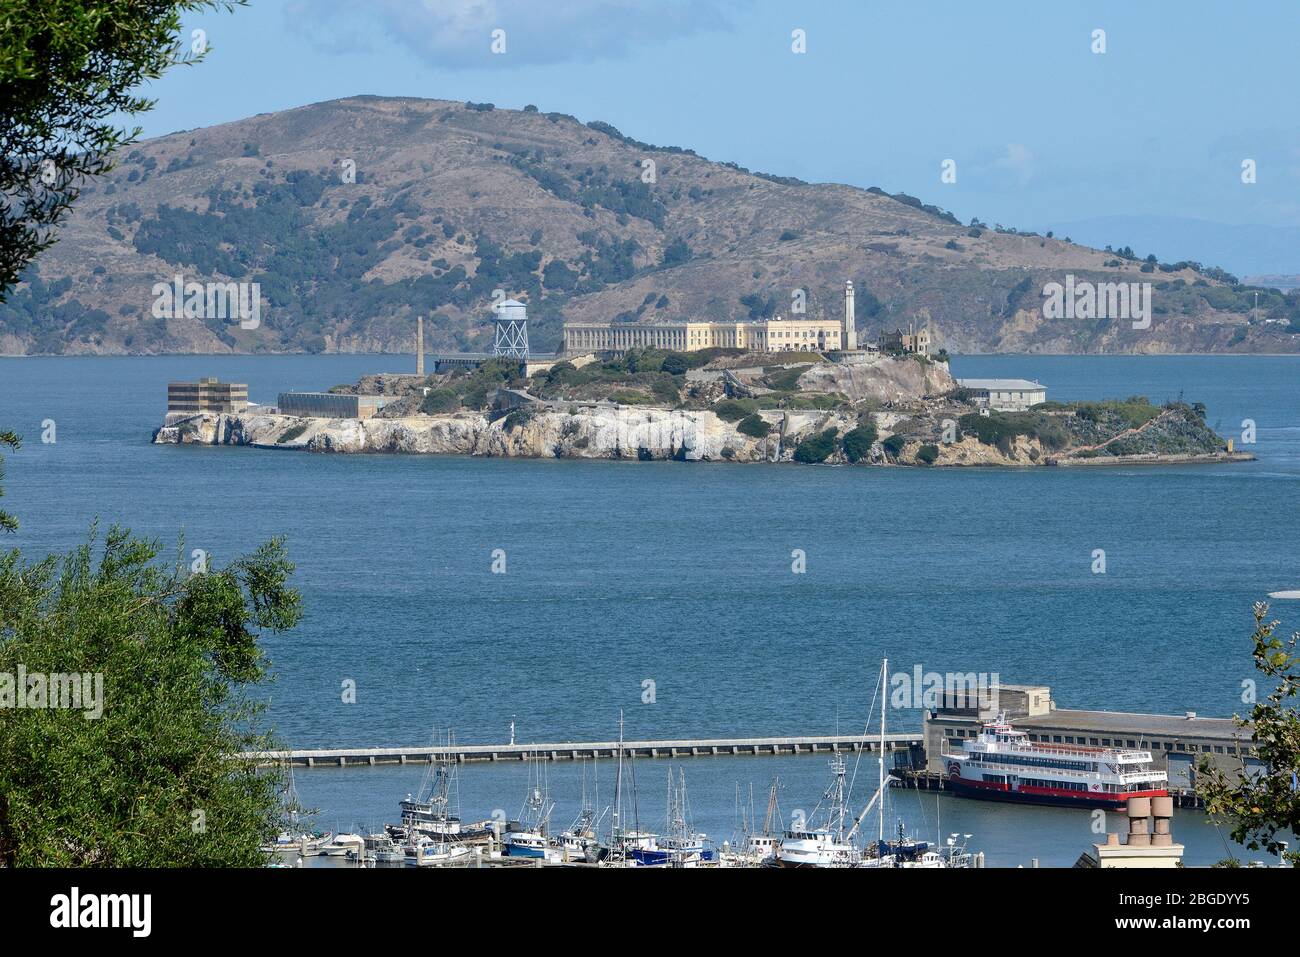 The prison island Alcatraz in the bay of San Francisco, California, USA. Stock Photo